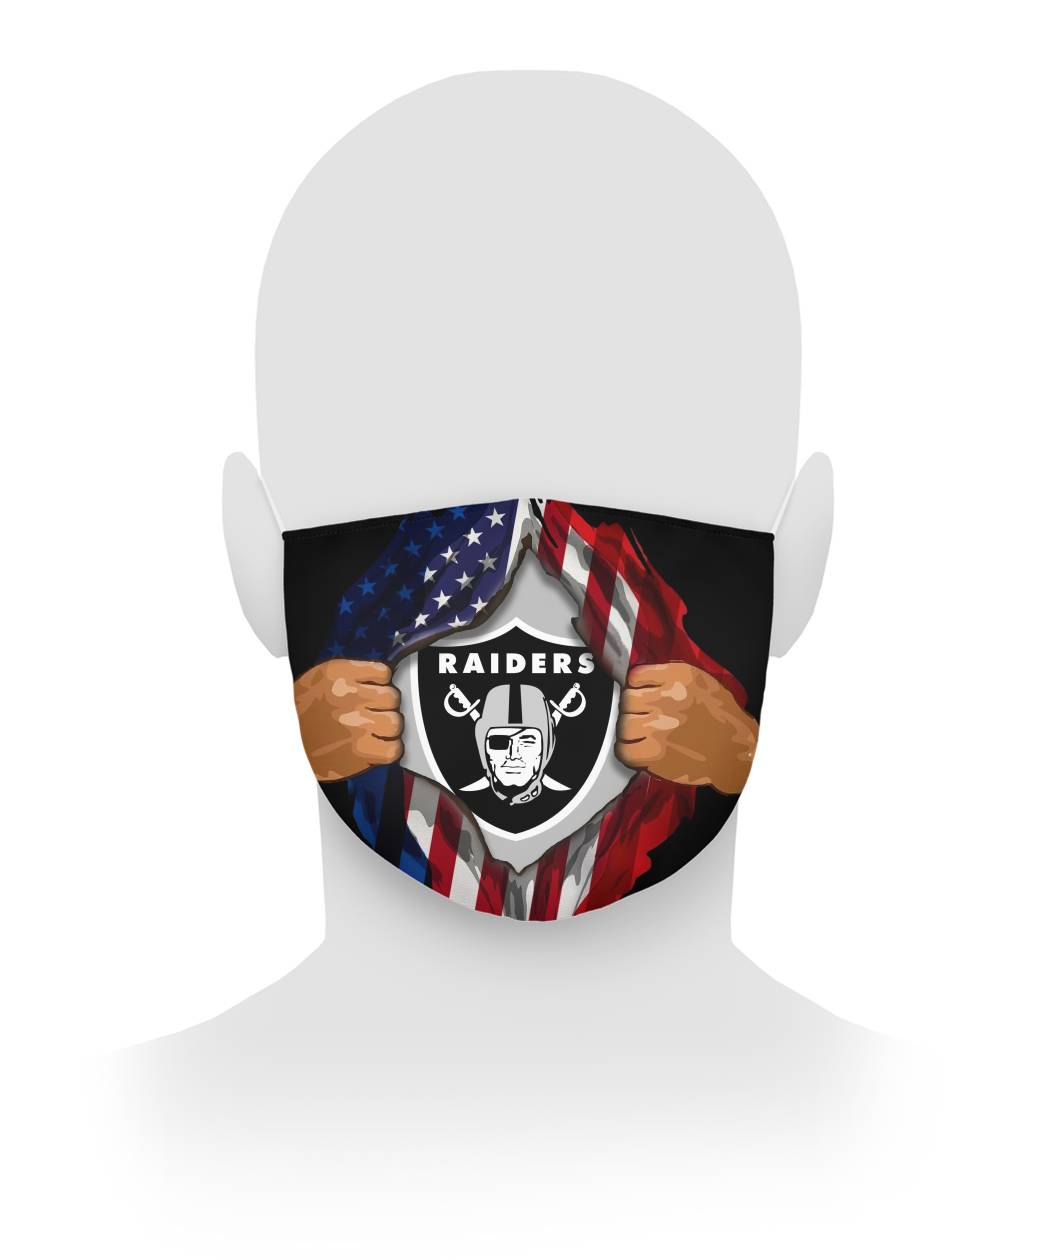 Raiders inside me american flag face mask - detail